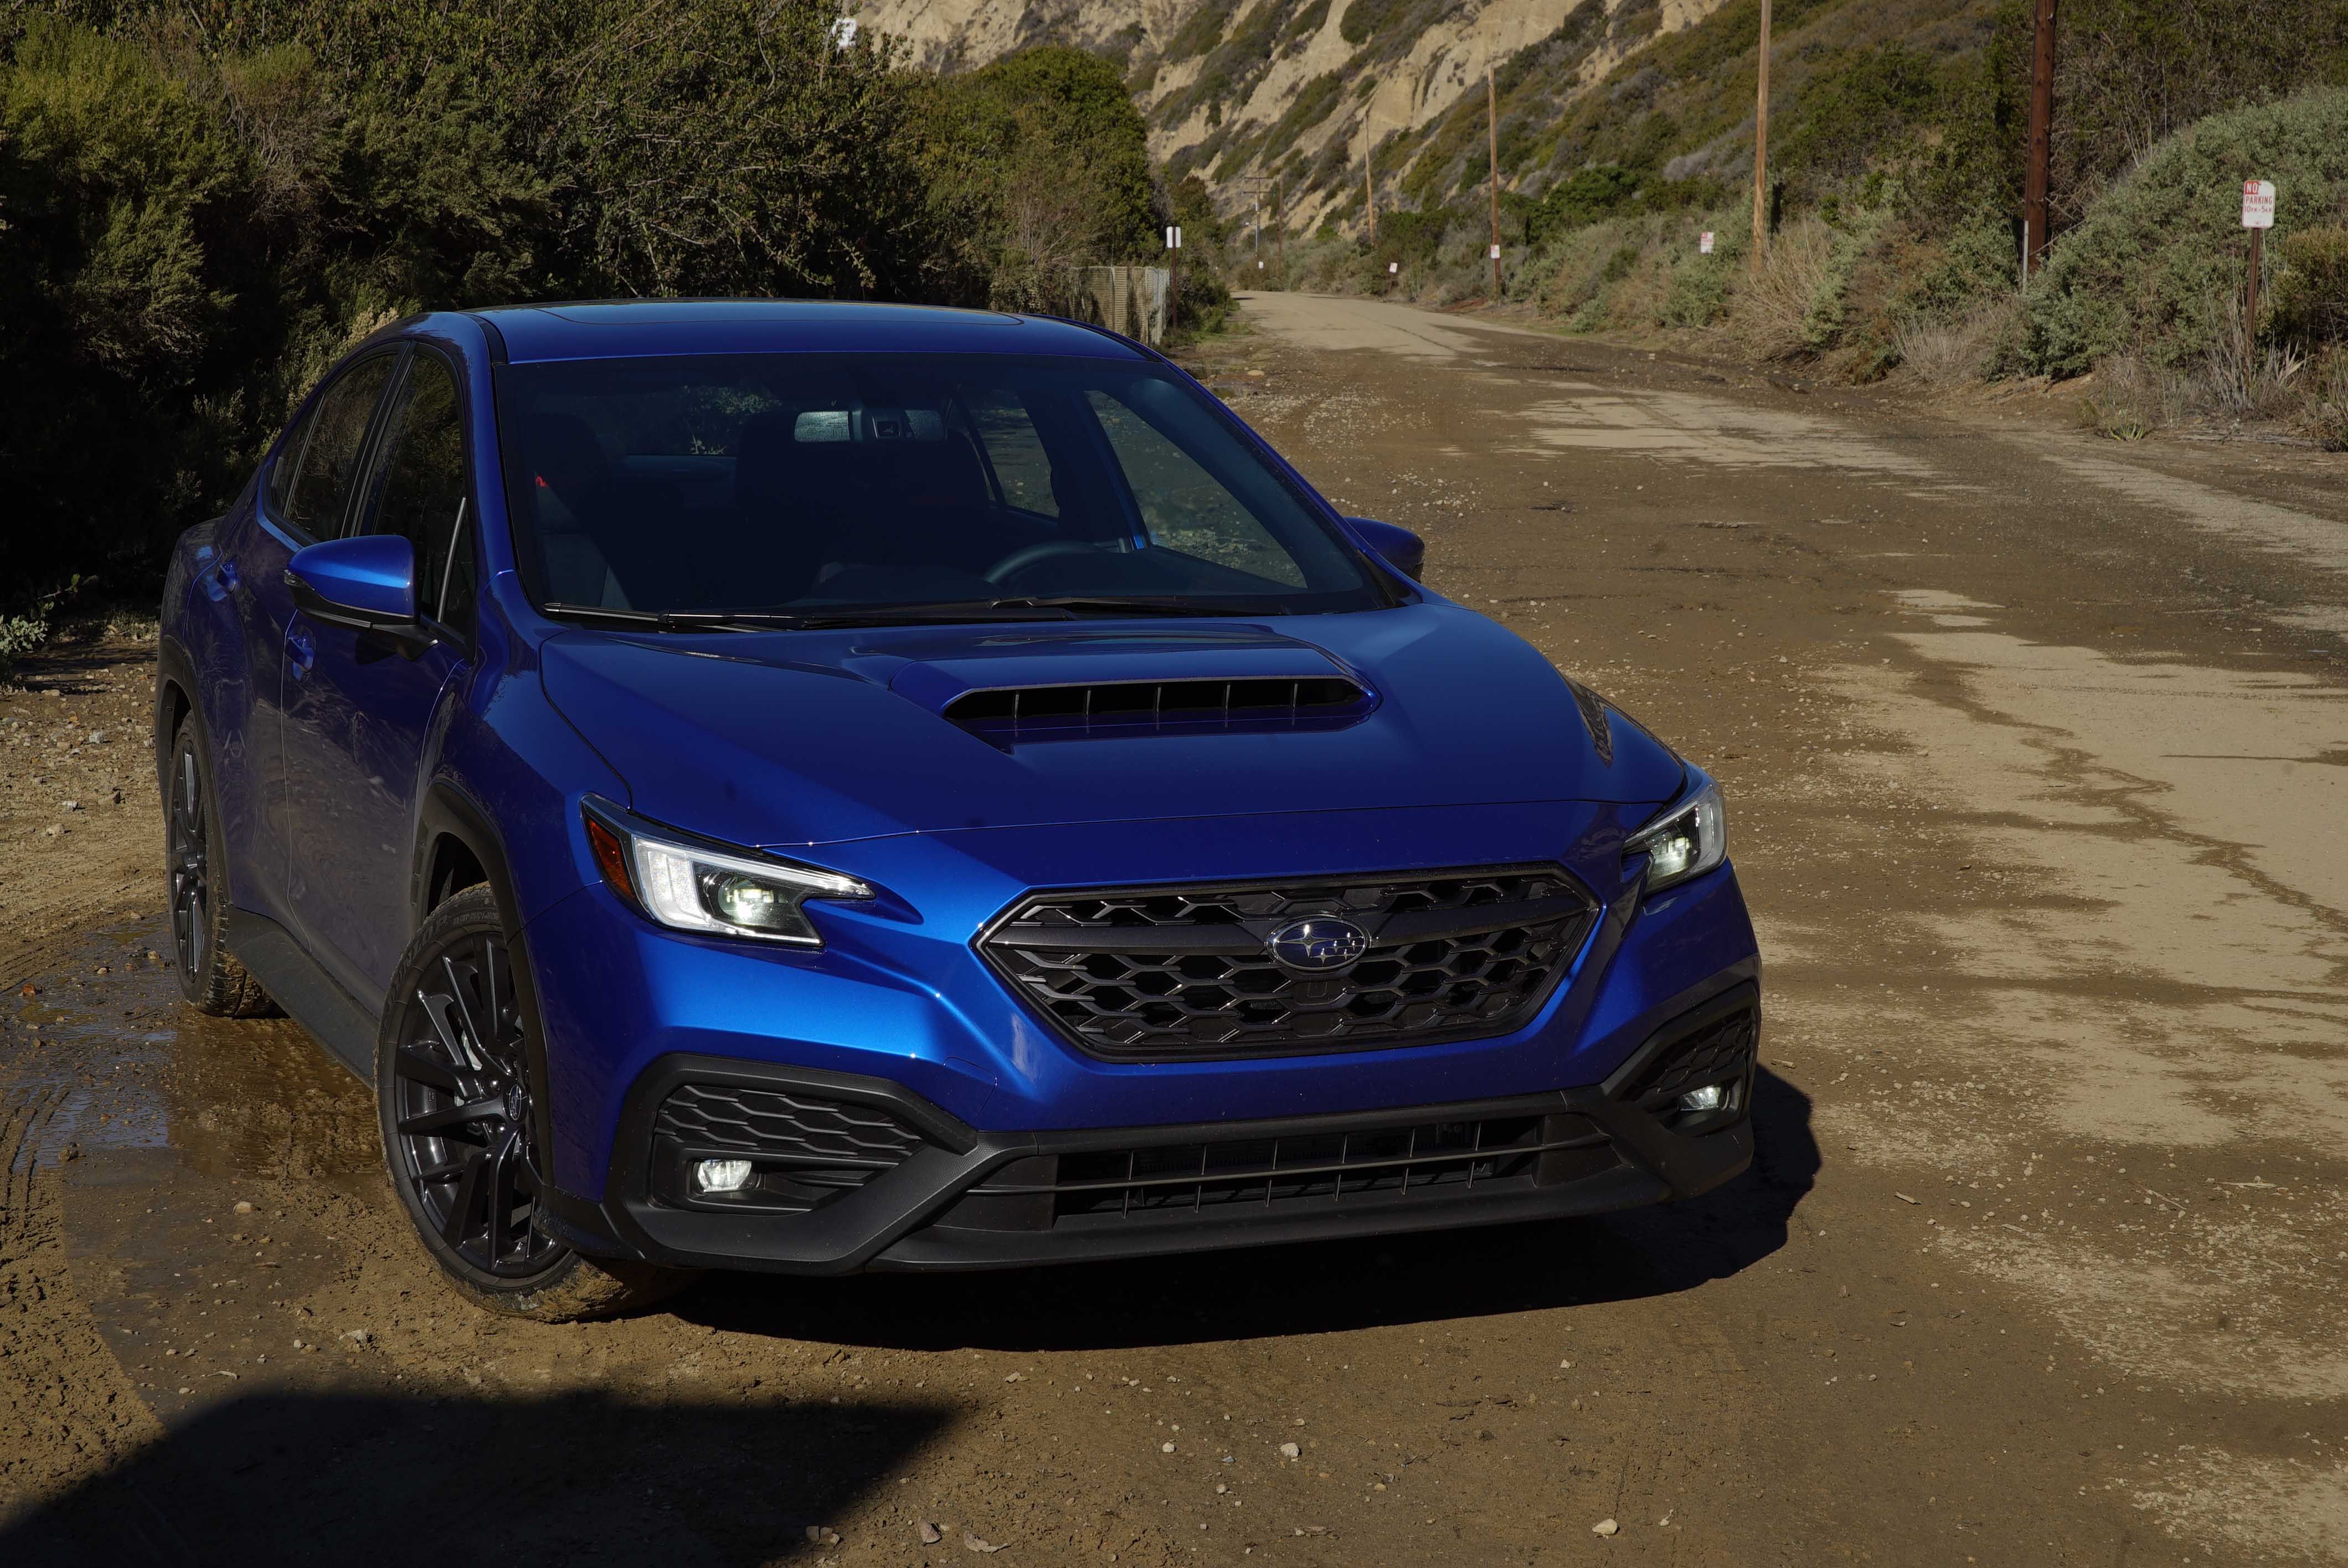 2022 Subaru WRX Review: So Good It's Almost Boring